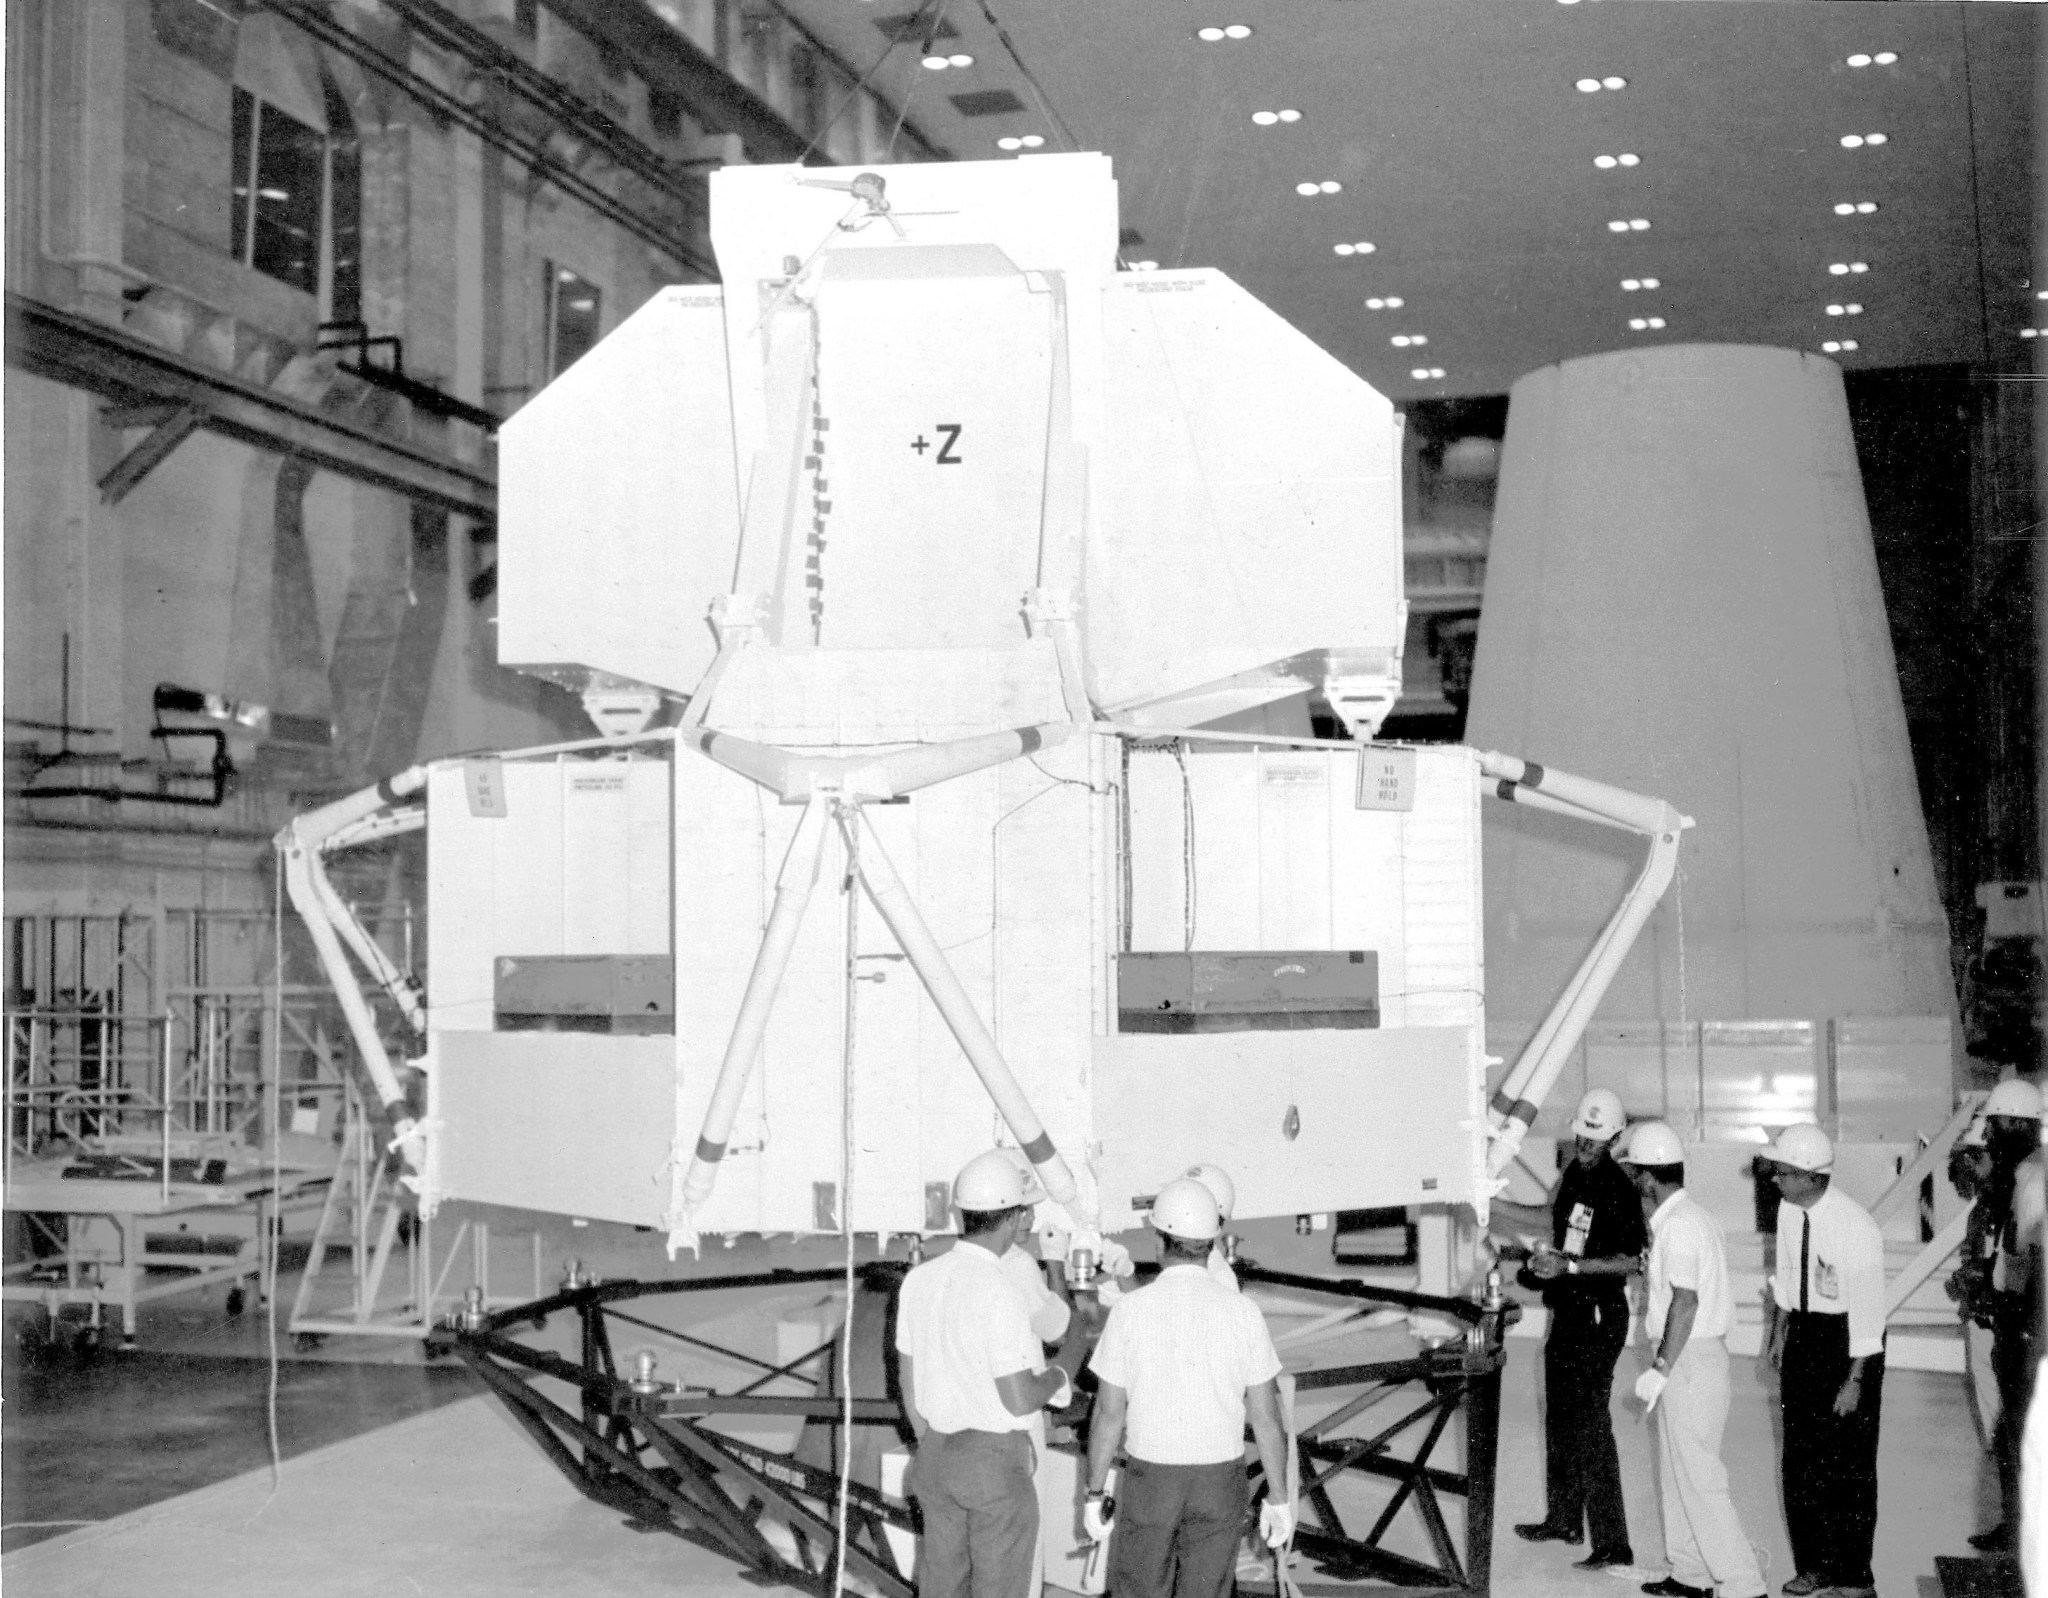 Lunar Module Test Article -2R before integration into the Spacecraft Lunar Module Adapter.